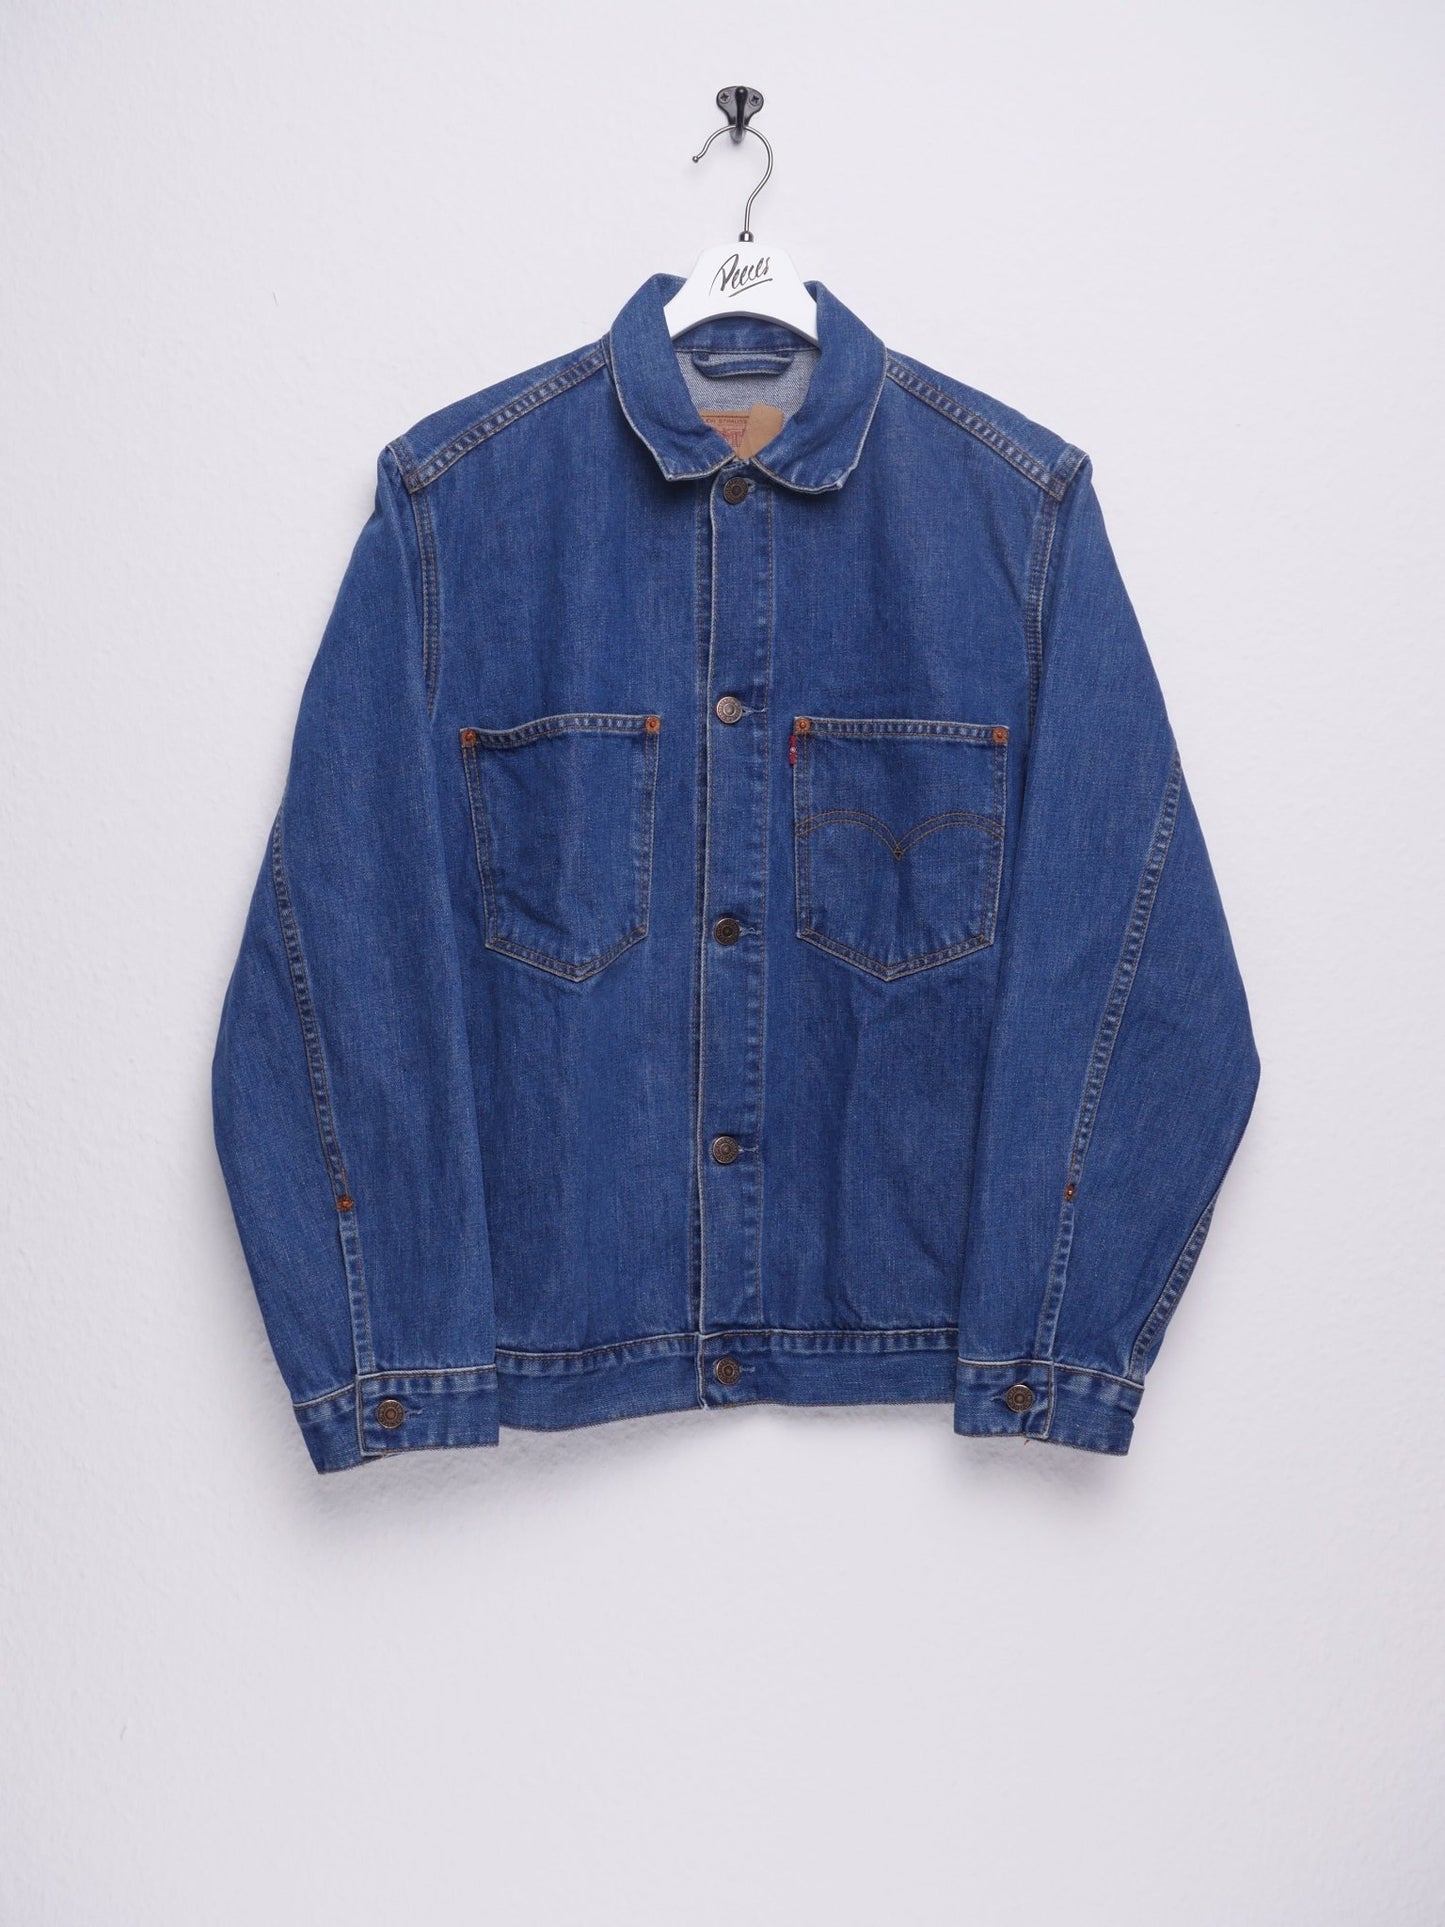 Levis Vintage Denim Jacket - Peeces